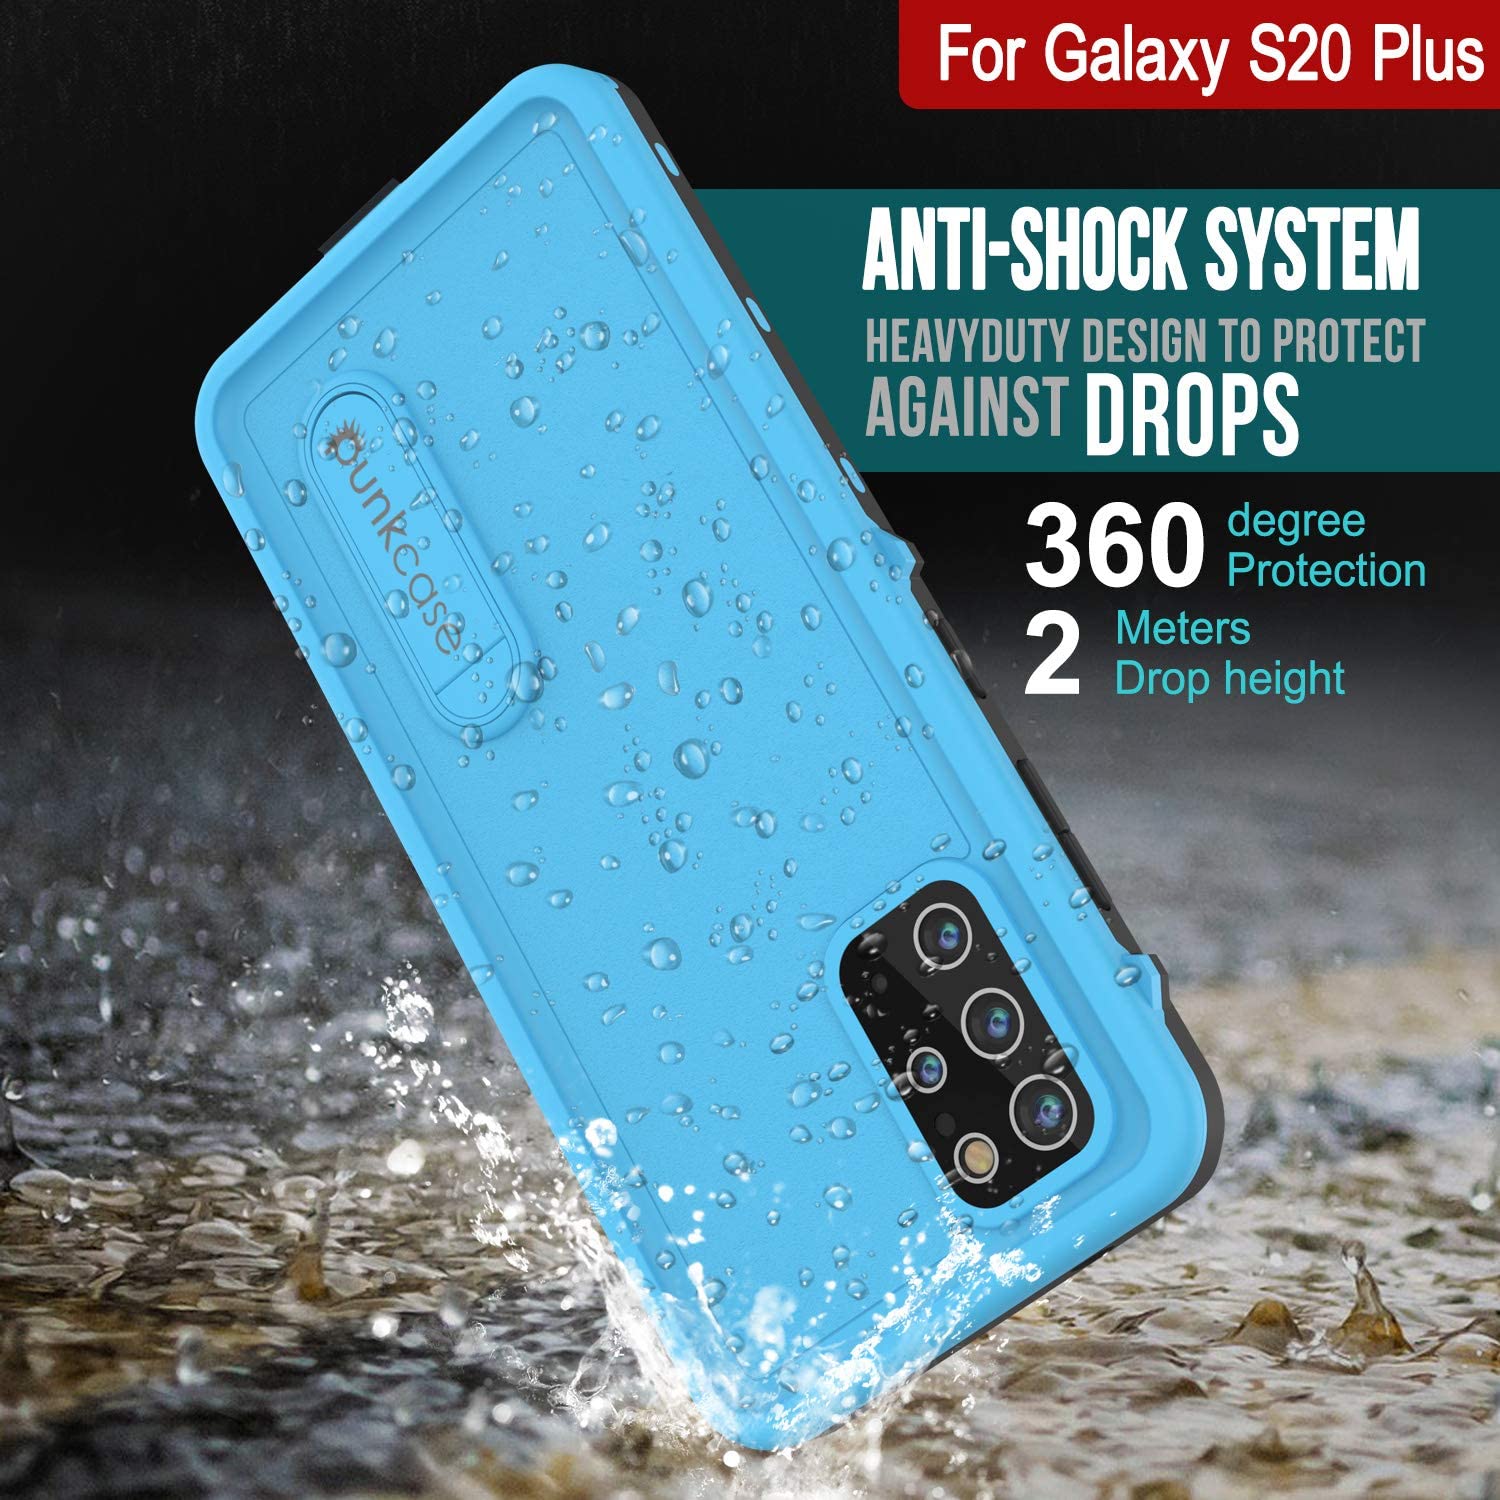 Galaxy S20+ Plus Waterproof Case, Punkcase [KickStud Series] Armor Cover [Light Blue]